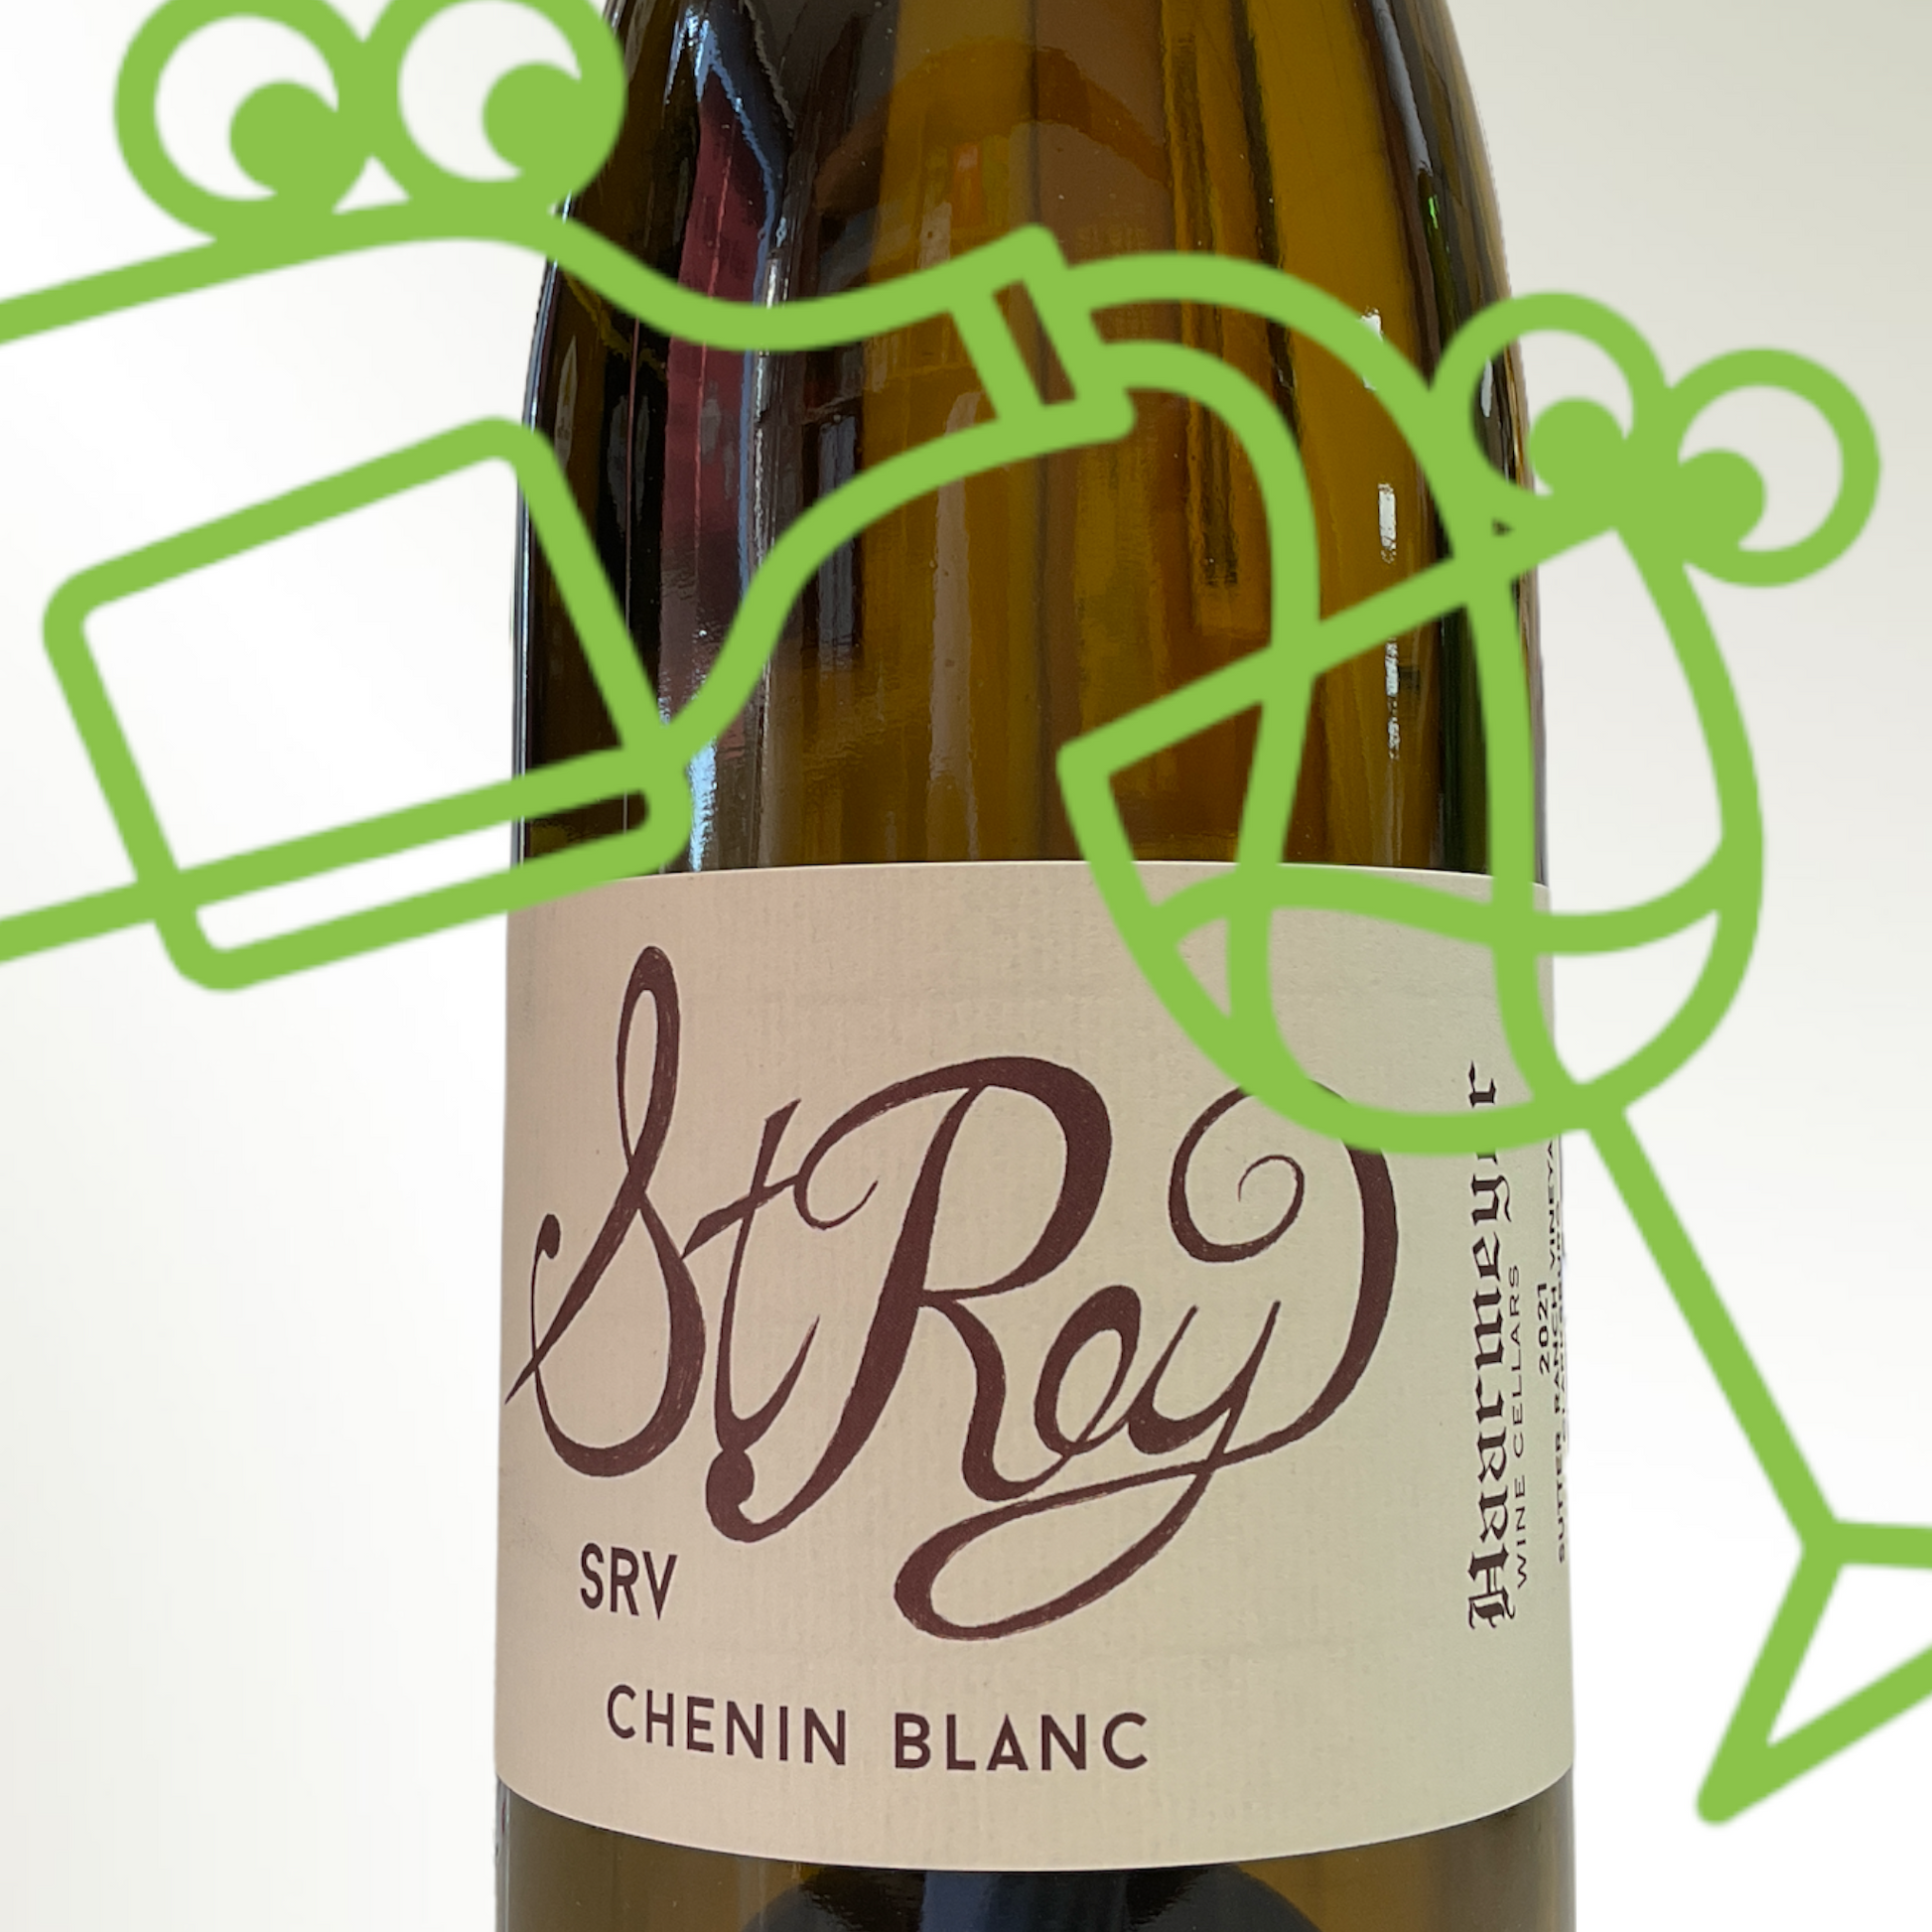 Haarmeyer Cellars 'St. Rey' Chenin Blanc 2021 California - Williston Park Wines & Spirits